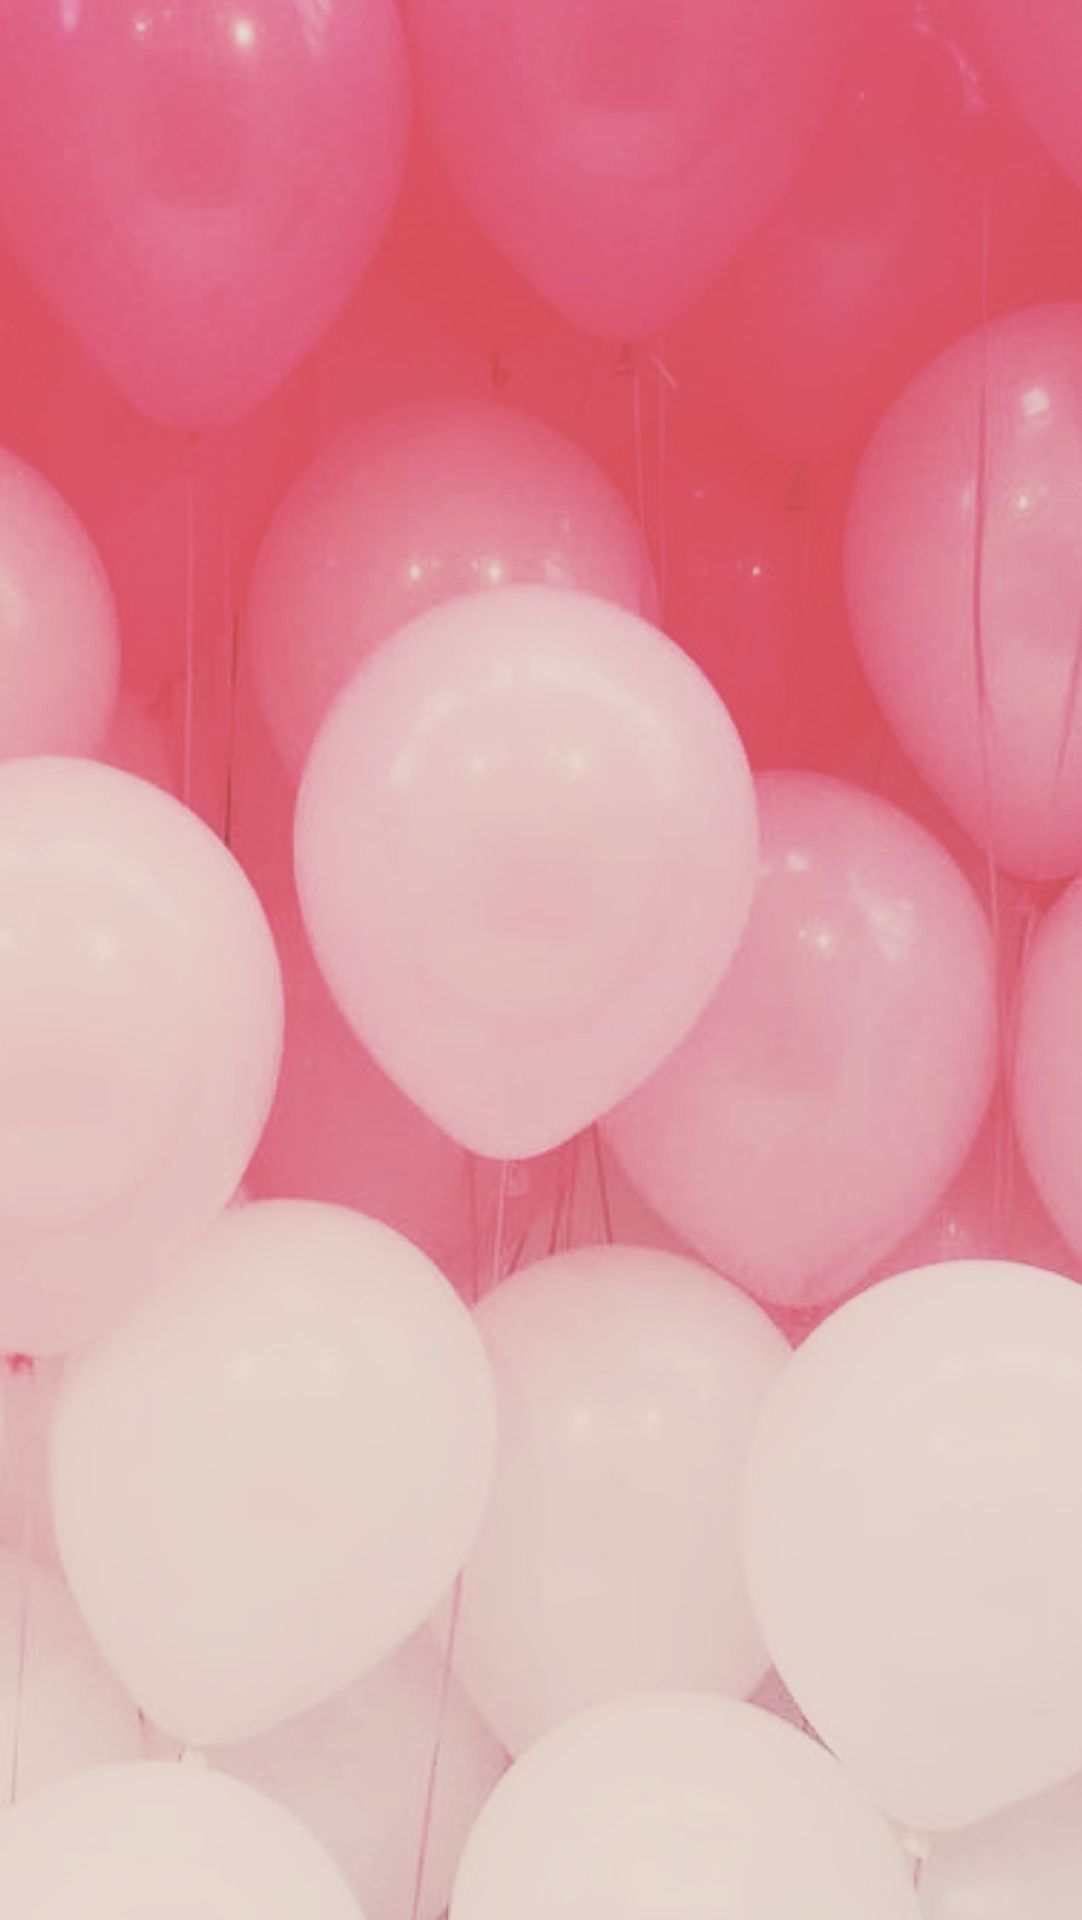 Black And Pink Balloons Wallpaper